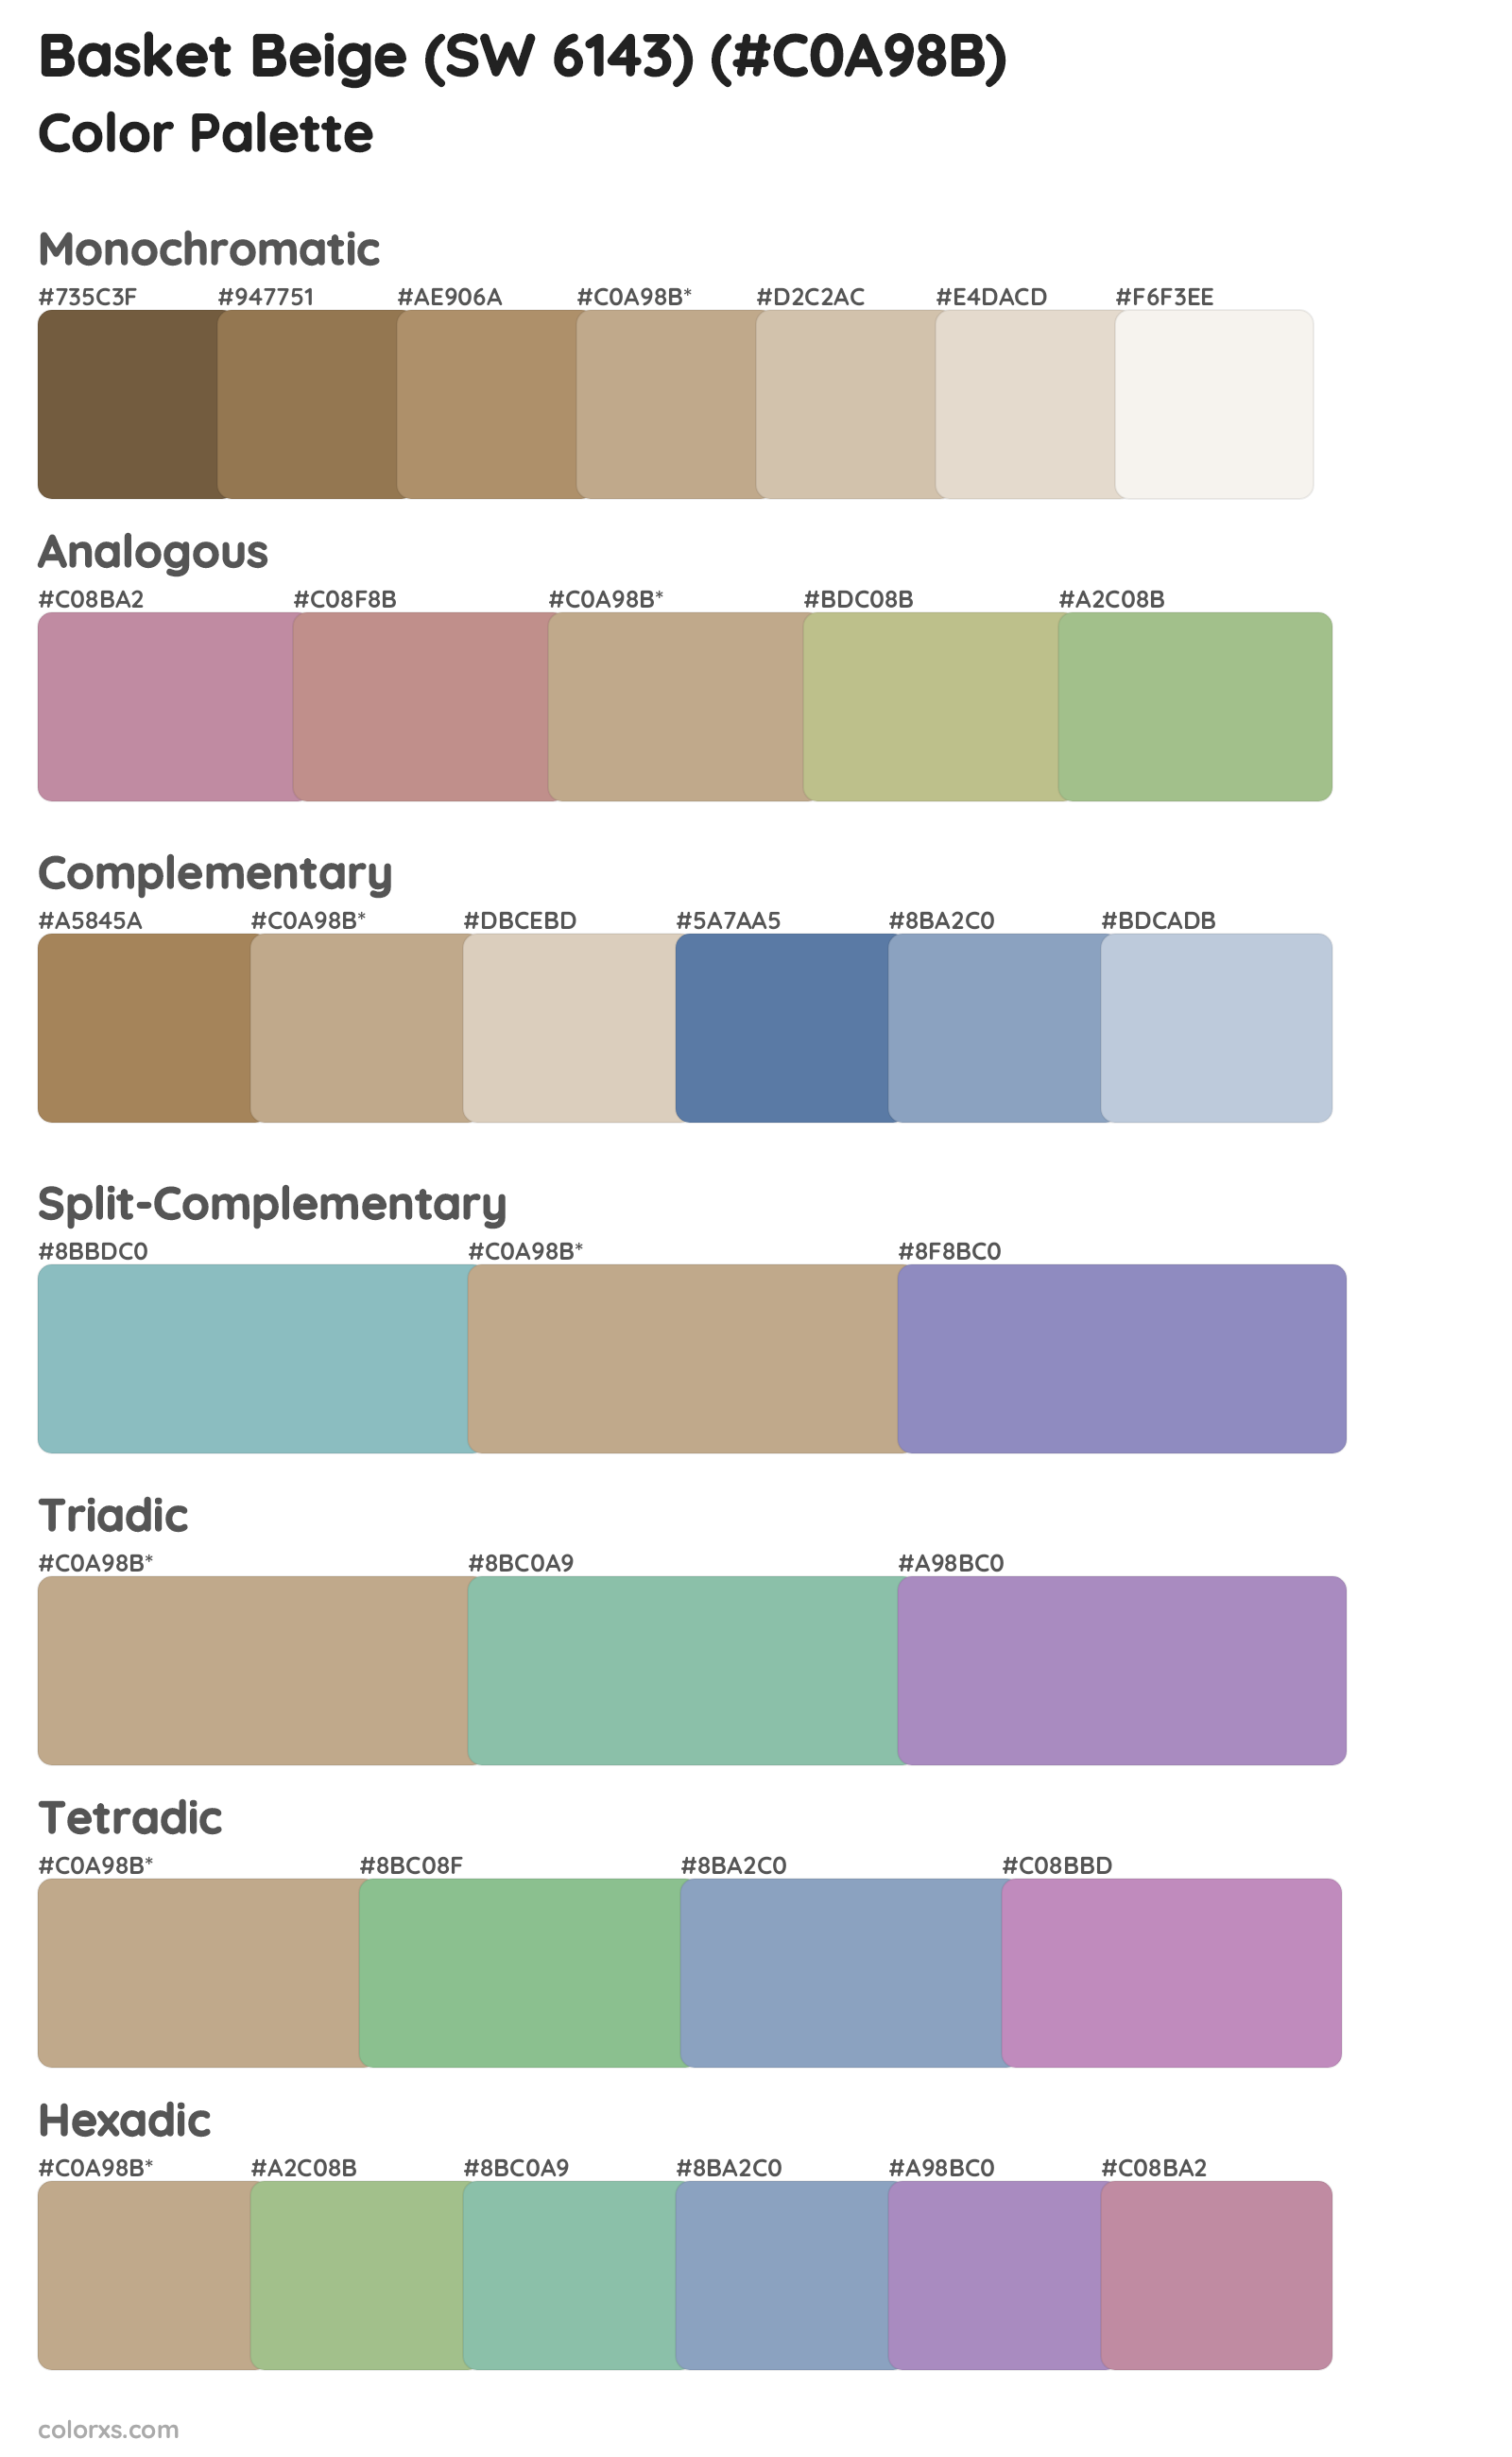 Basket Beige (SW 6143) Color Scheme Palettes